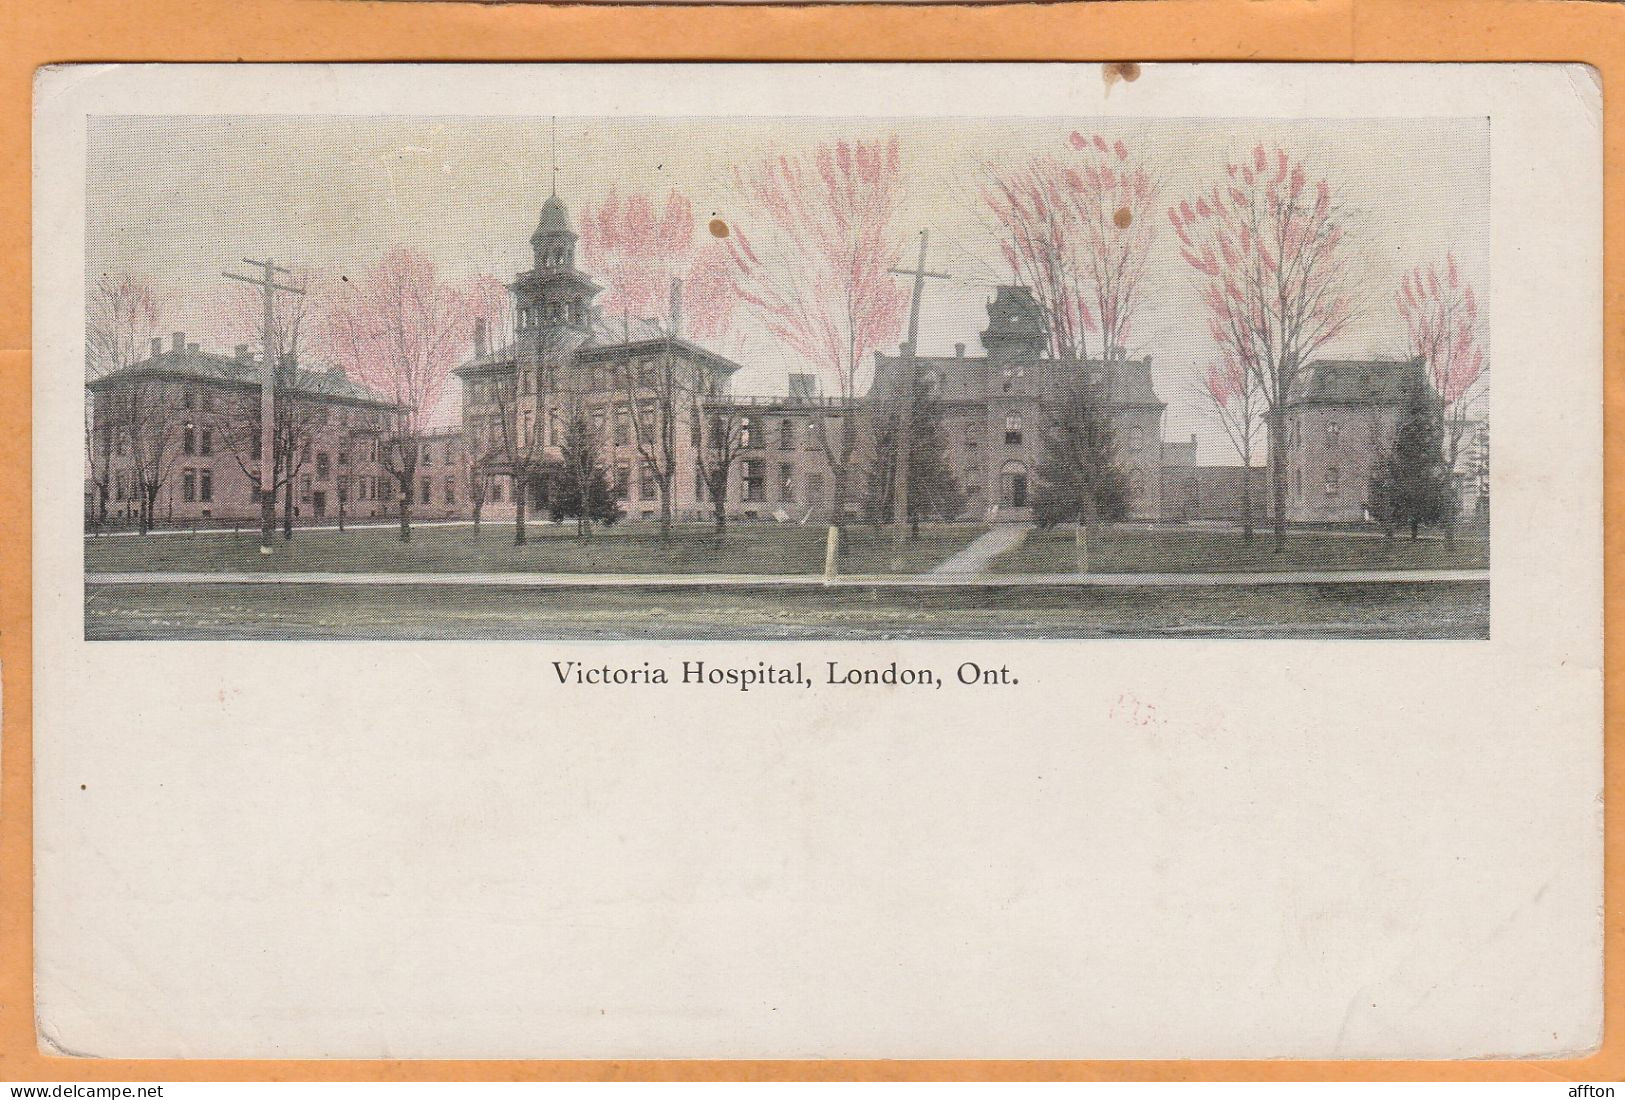 London Ontario Canada Old Postcard - London